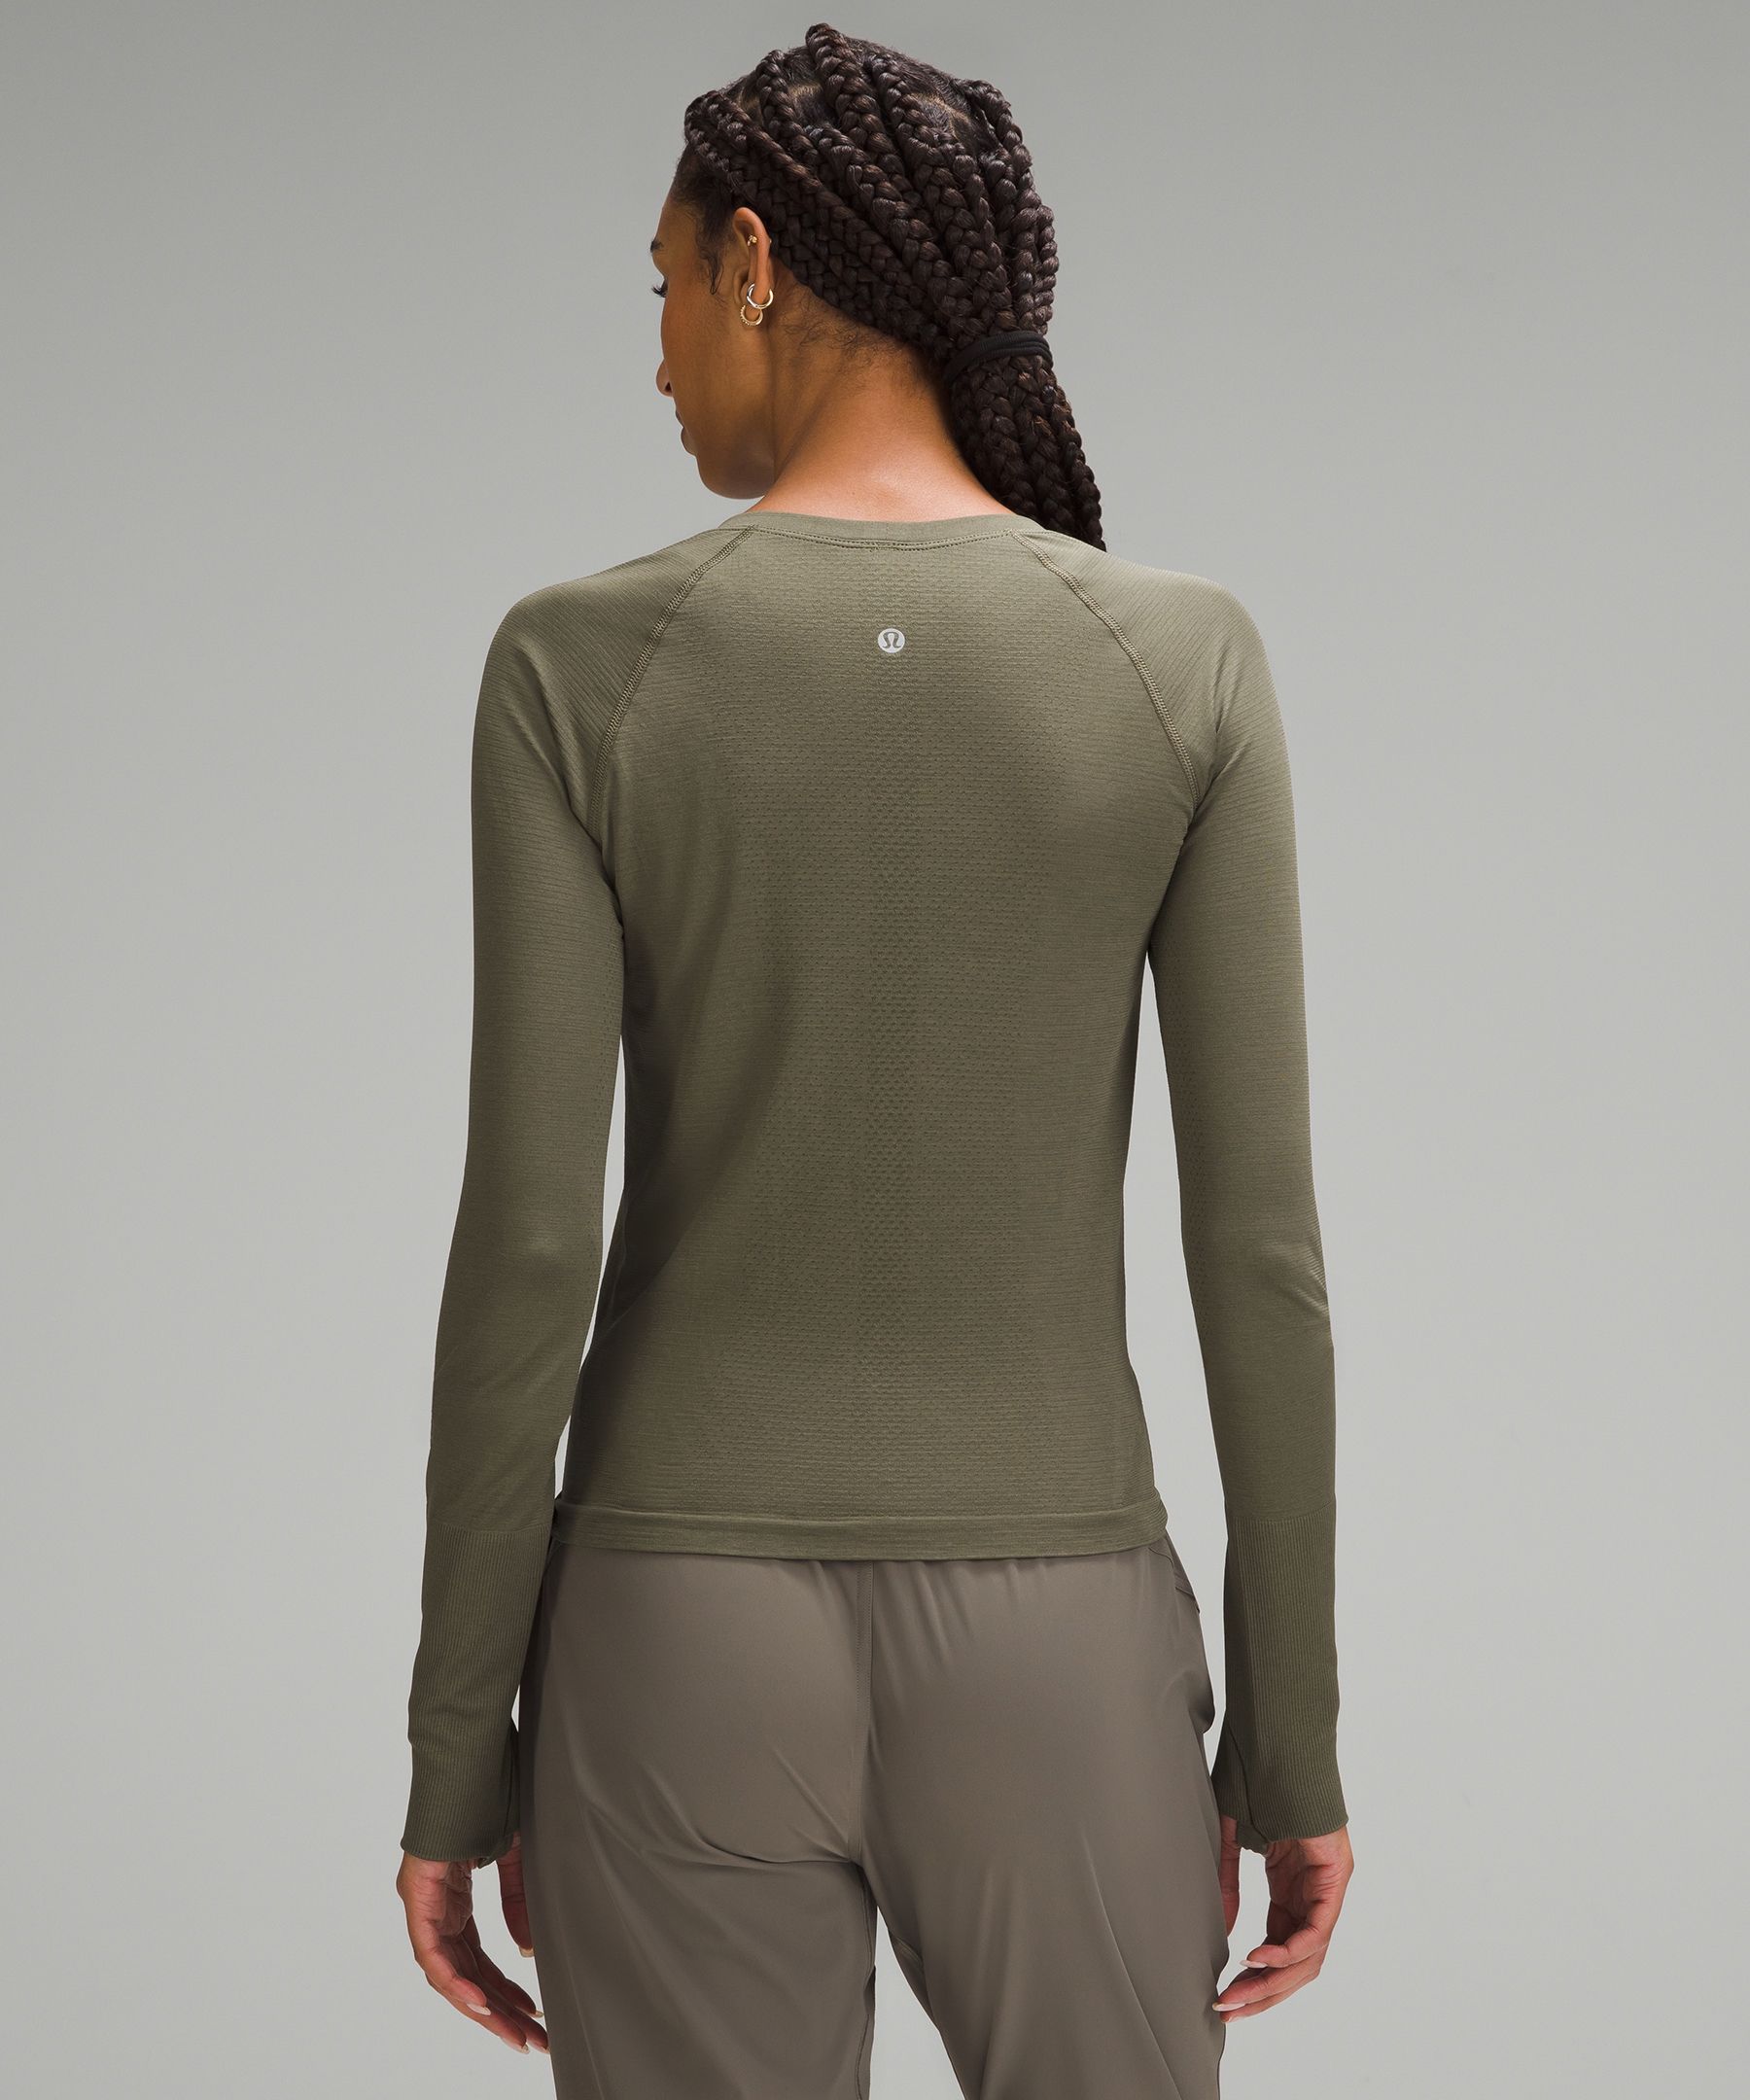 Swiftly Tech Long-Sleeve Shirt 2.0, Women's Long Sleeve Shirts, lululemon